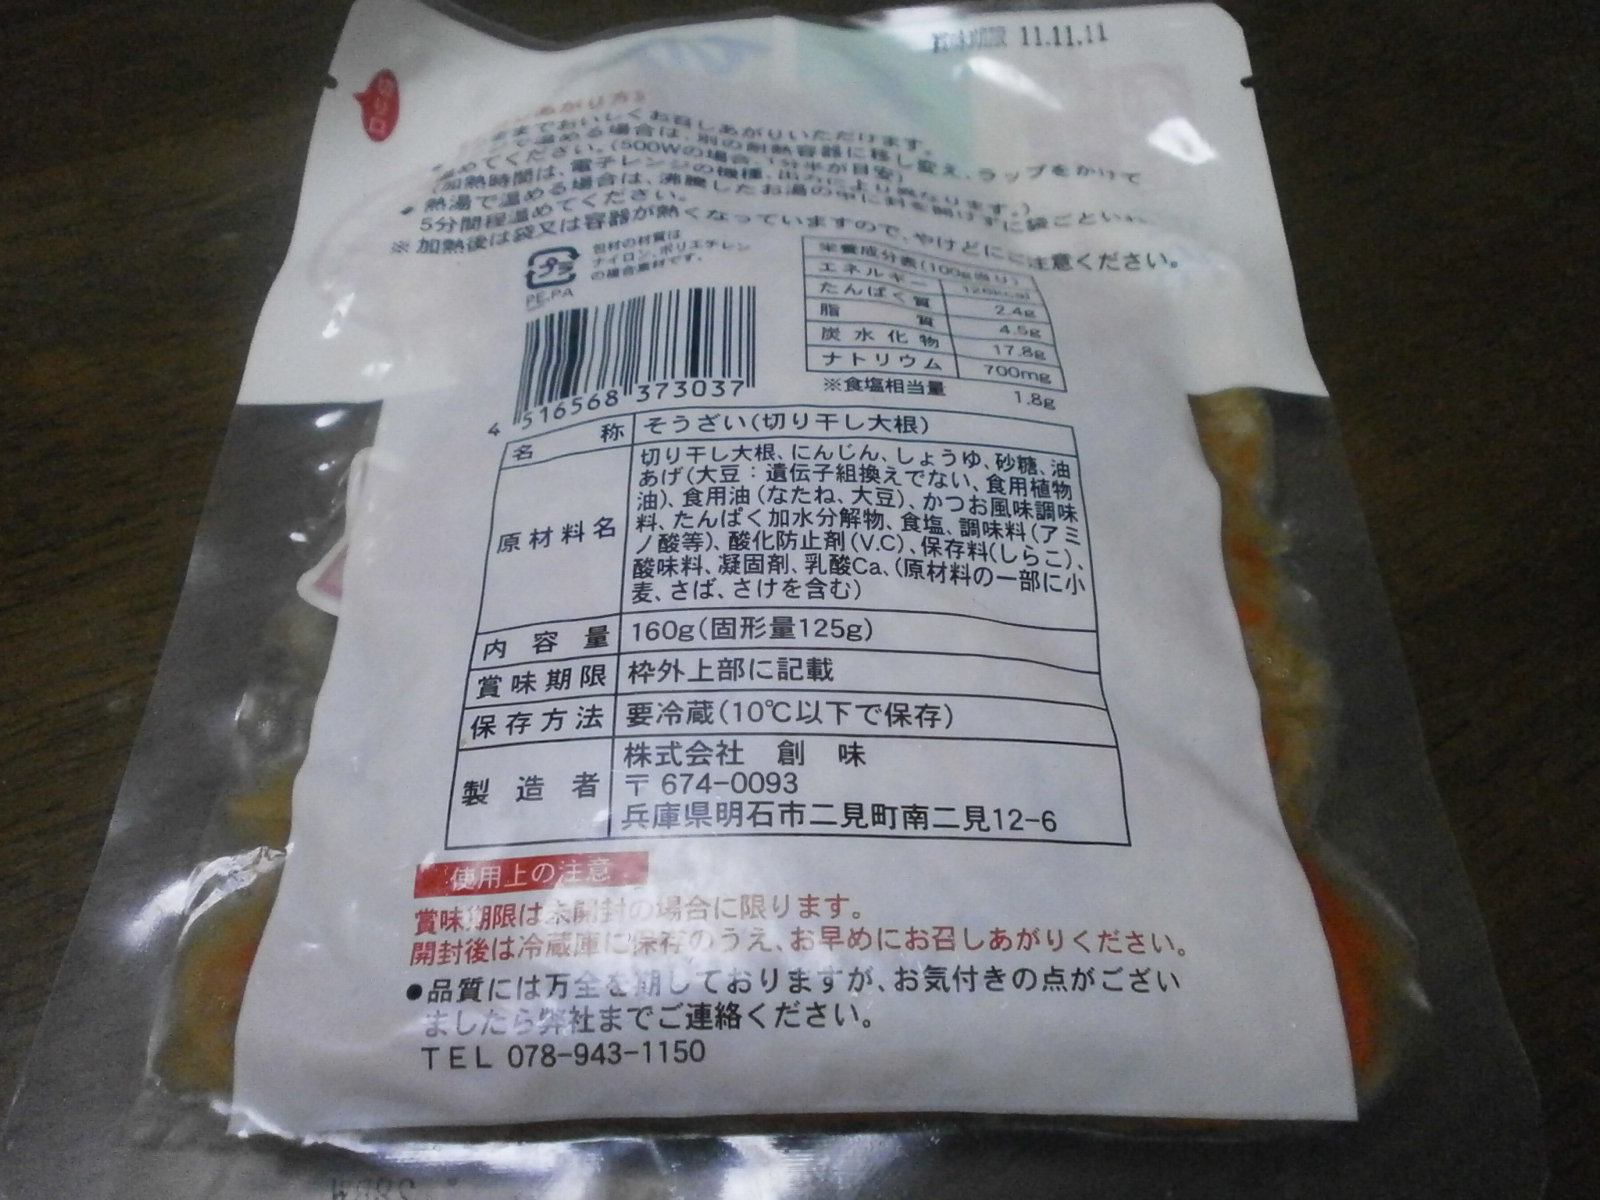 Radish dried daikon strips (flavor creation)